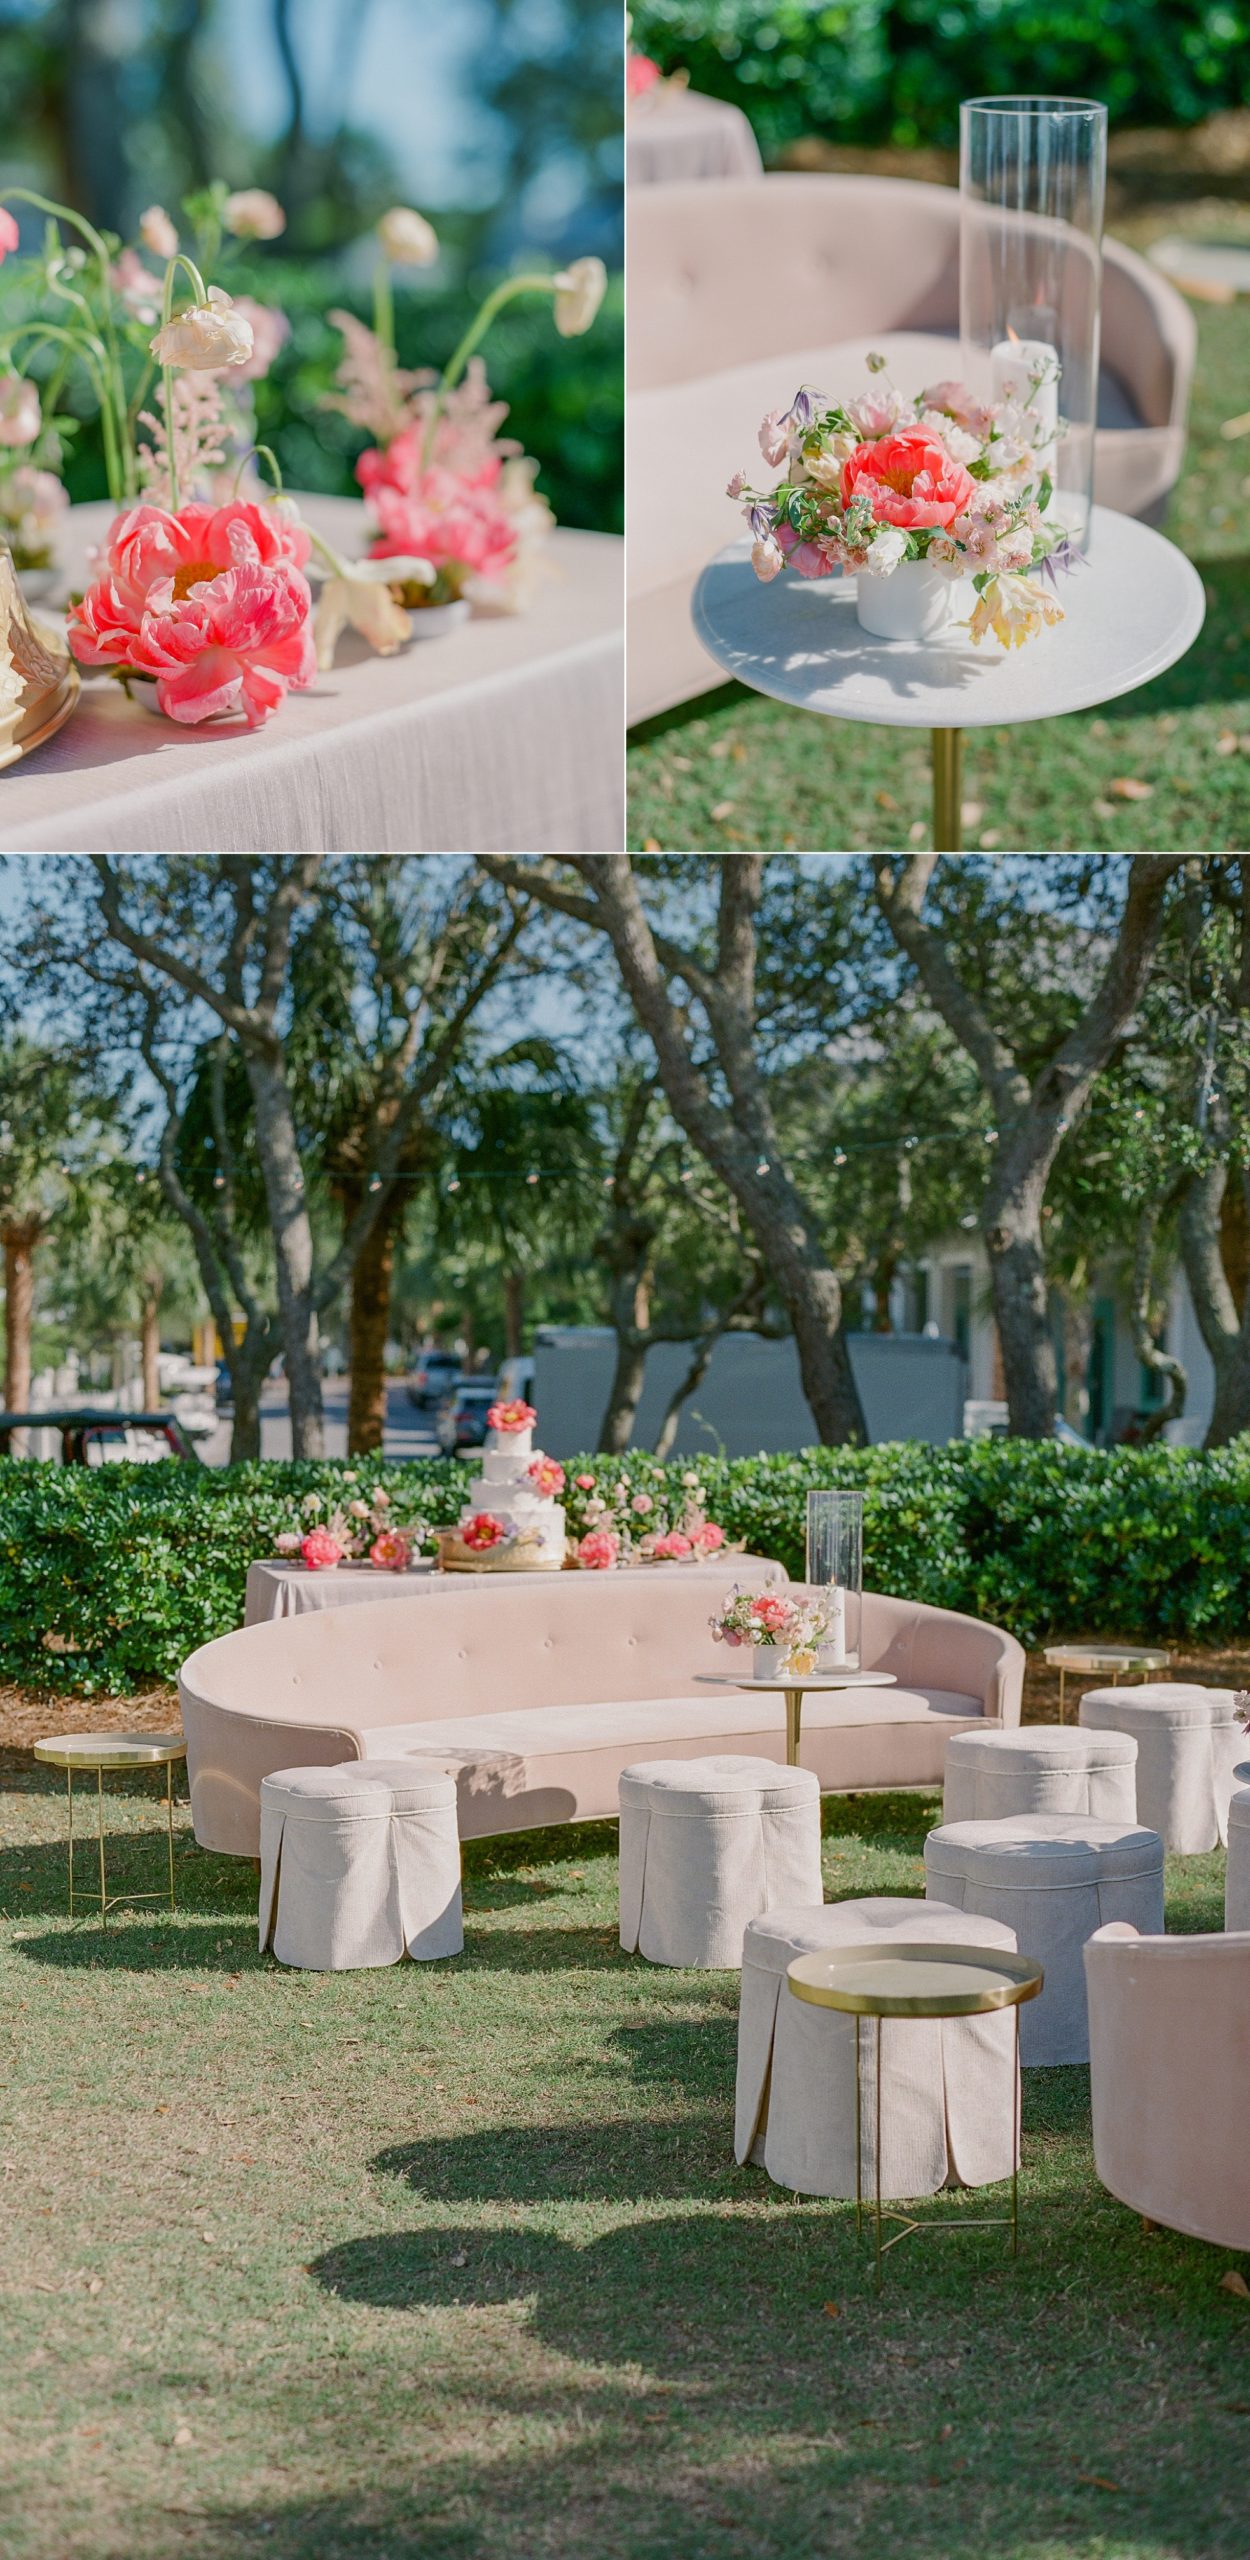 30A-Florida-Wedding-tented-wedding-carillon-beach-Jessie-Barksdale-Photography-Rosemary-Beach-Photographer_0010.jpg